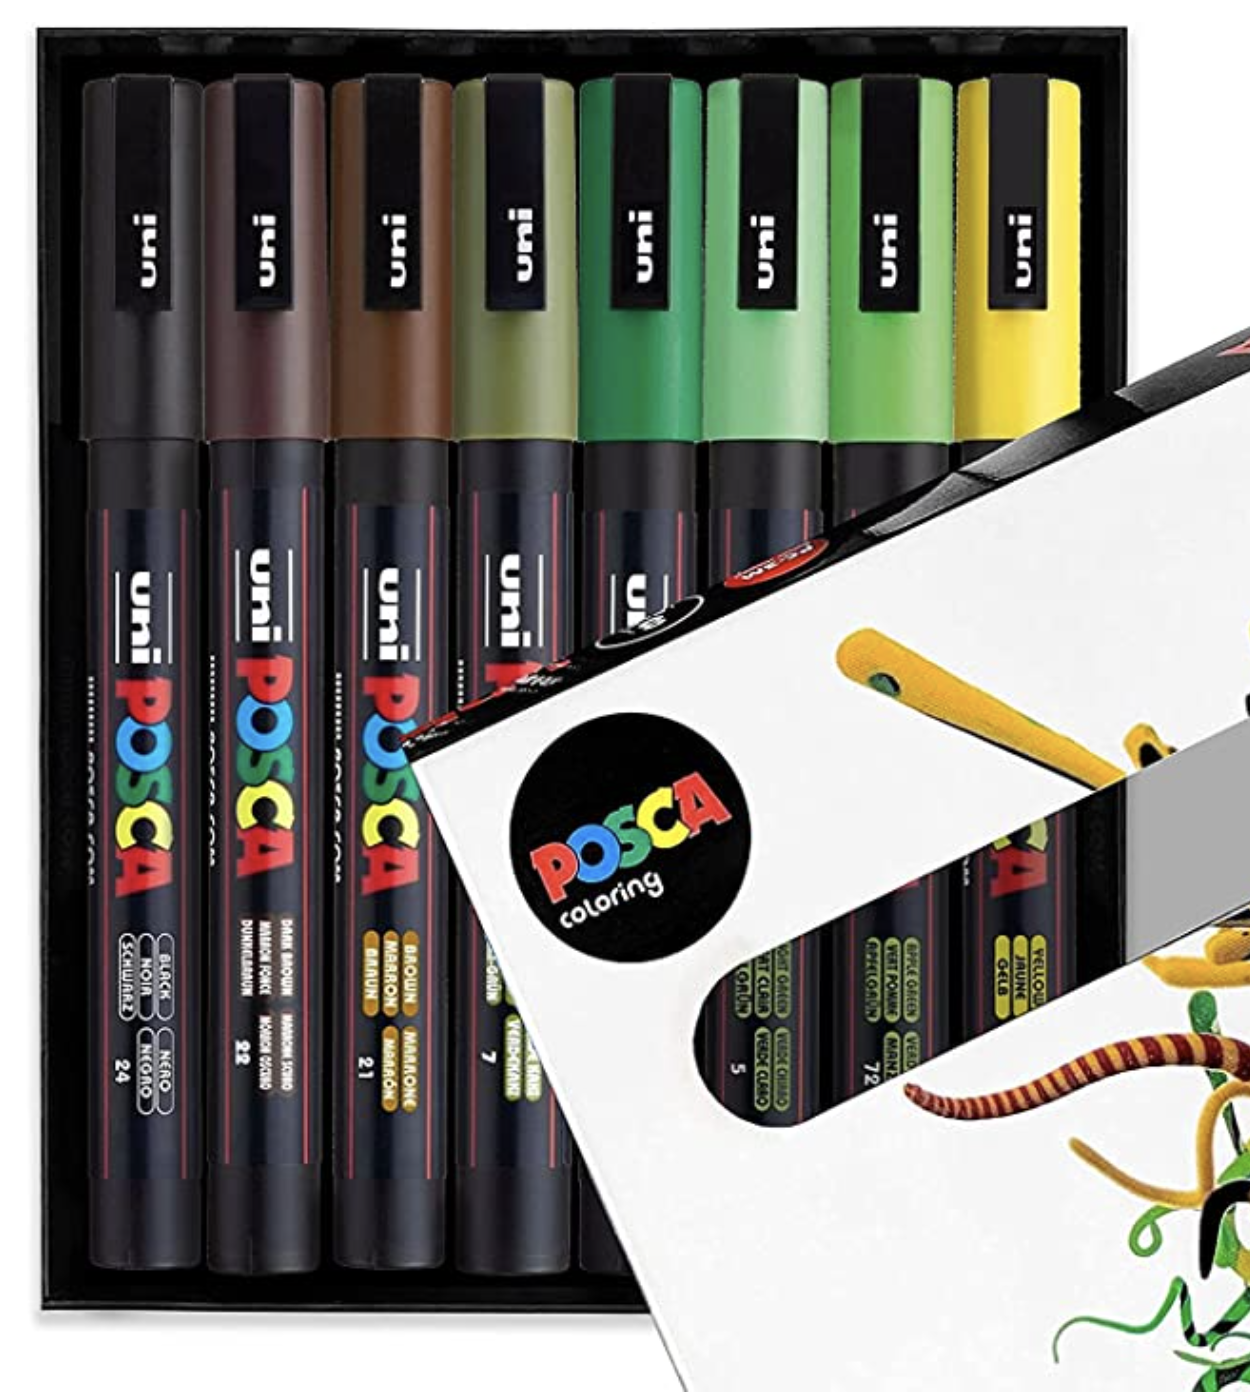 uni POSCA Acrylic Paint Marker - PC-5M Medium - 8 Dark Colors Set 